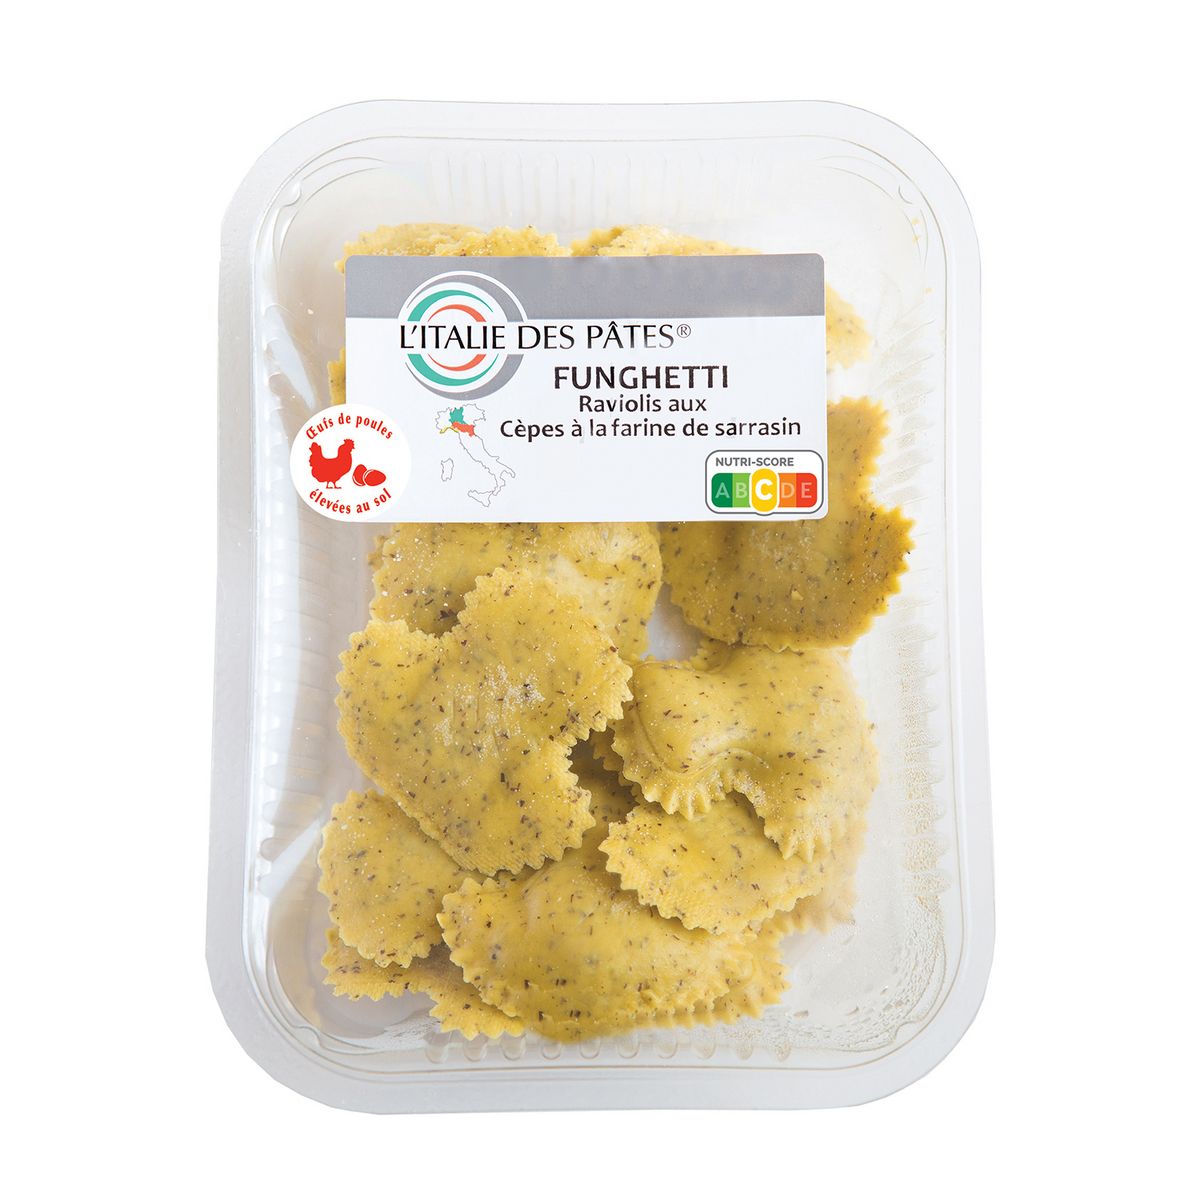 L'ITALIE DES PATES Funghetti raviolis aux cèpes à la farine de sarrazin 250g